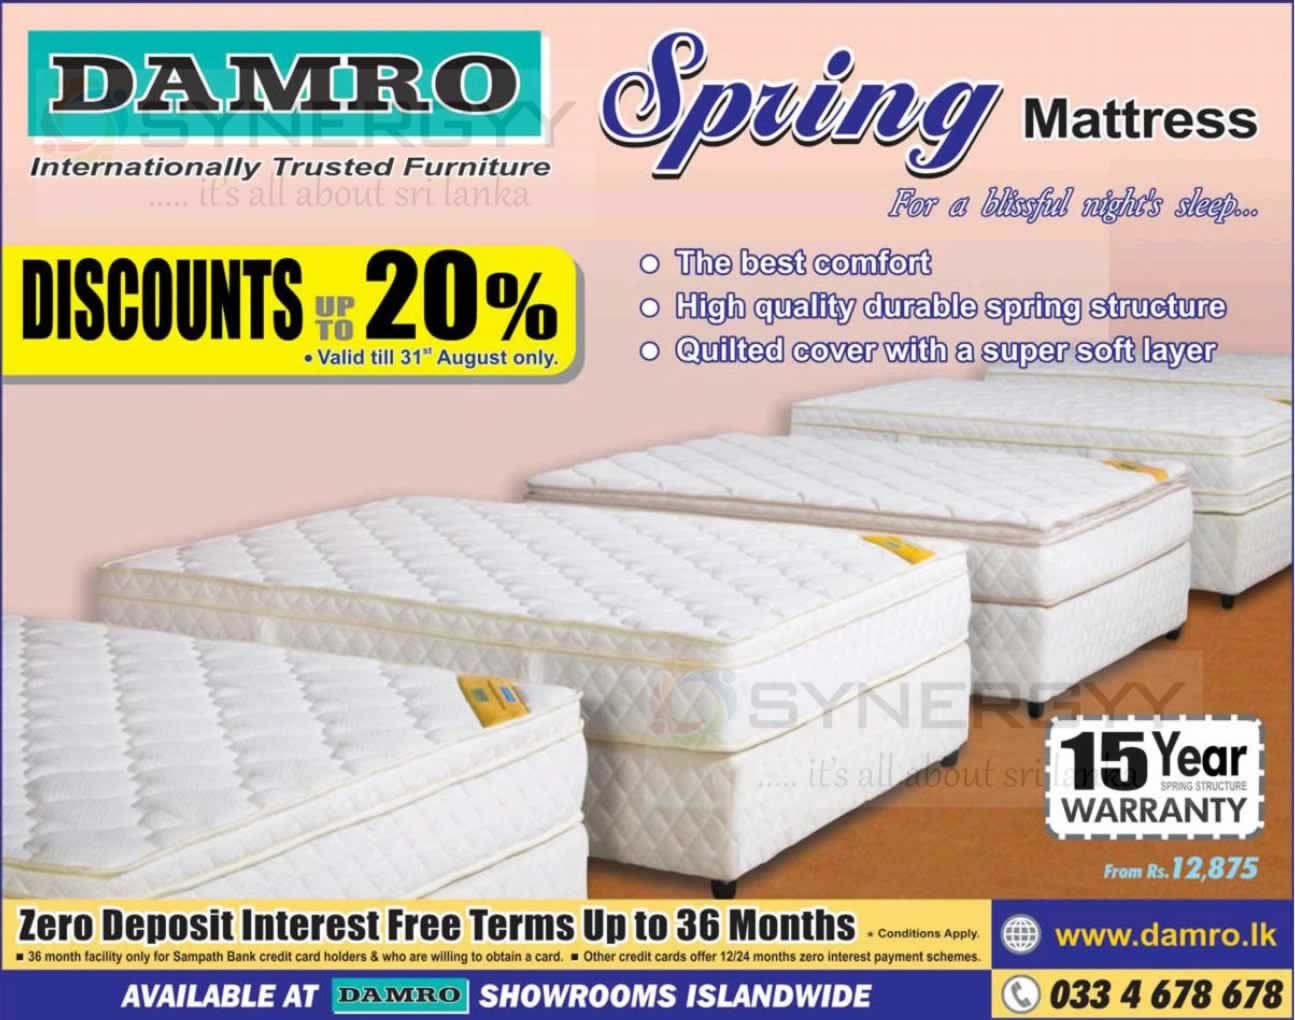 damro bed and mattress price in sri lanka